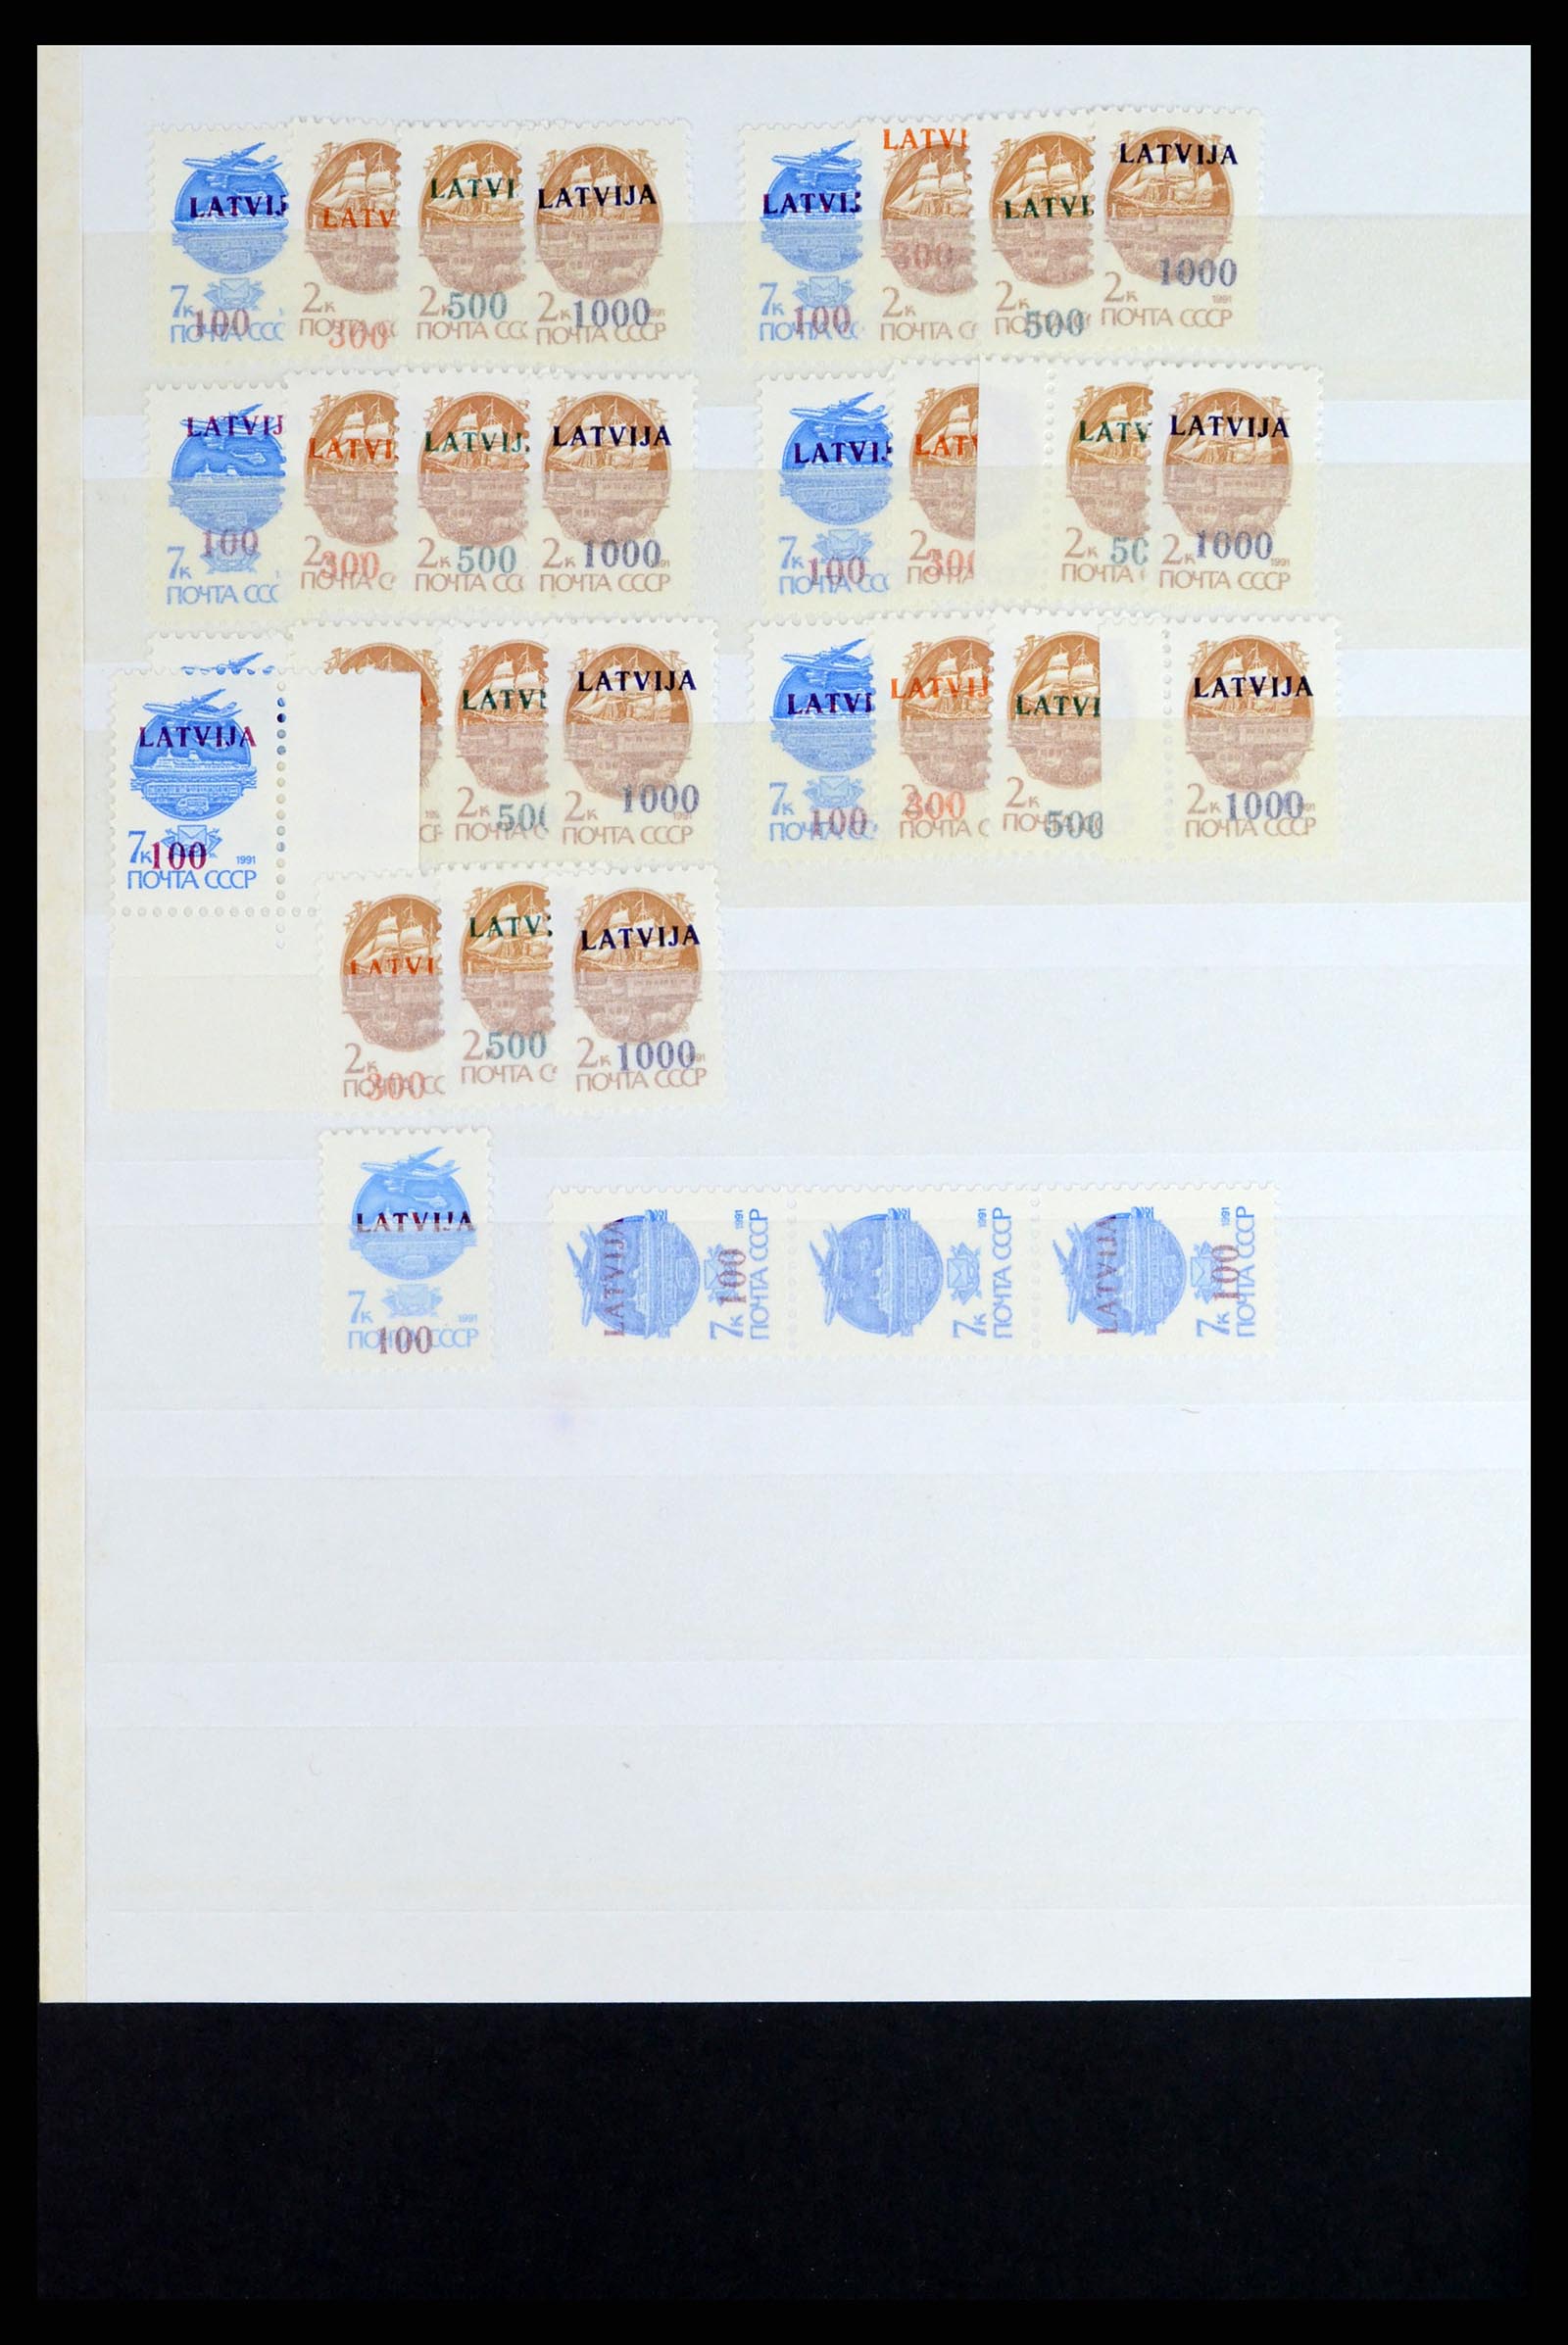 37351 303 - Postzegelverzameling 37351 Europese landen postfris 1990-2000.